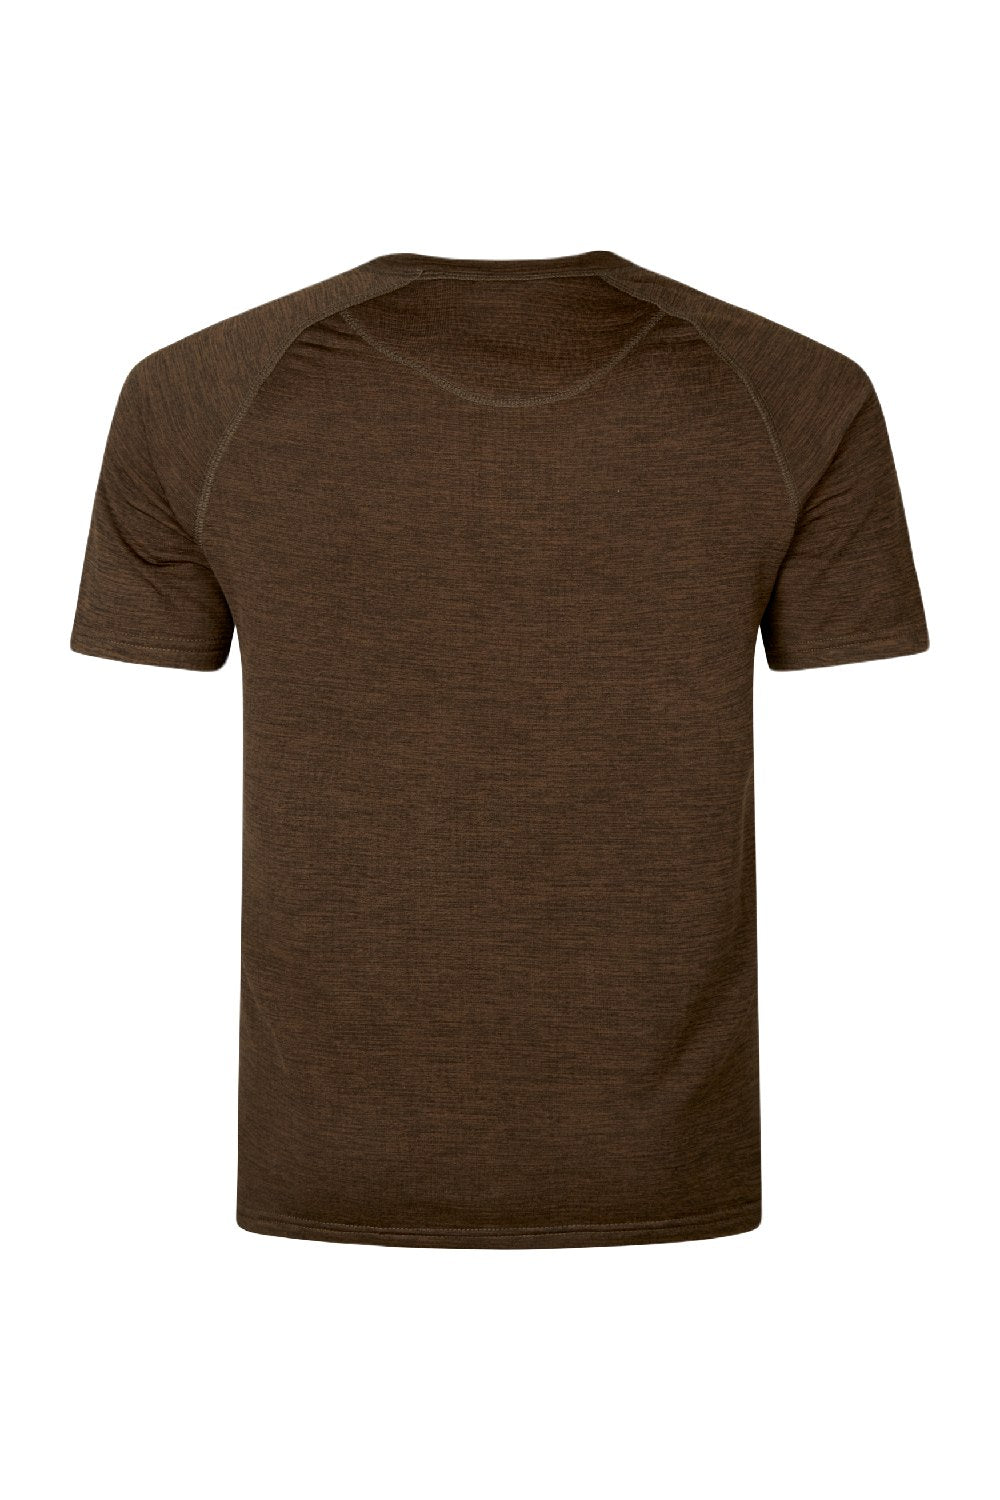 Seeland Mens Active Short Sleeve T-Shirt in Demitasse Brown 